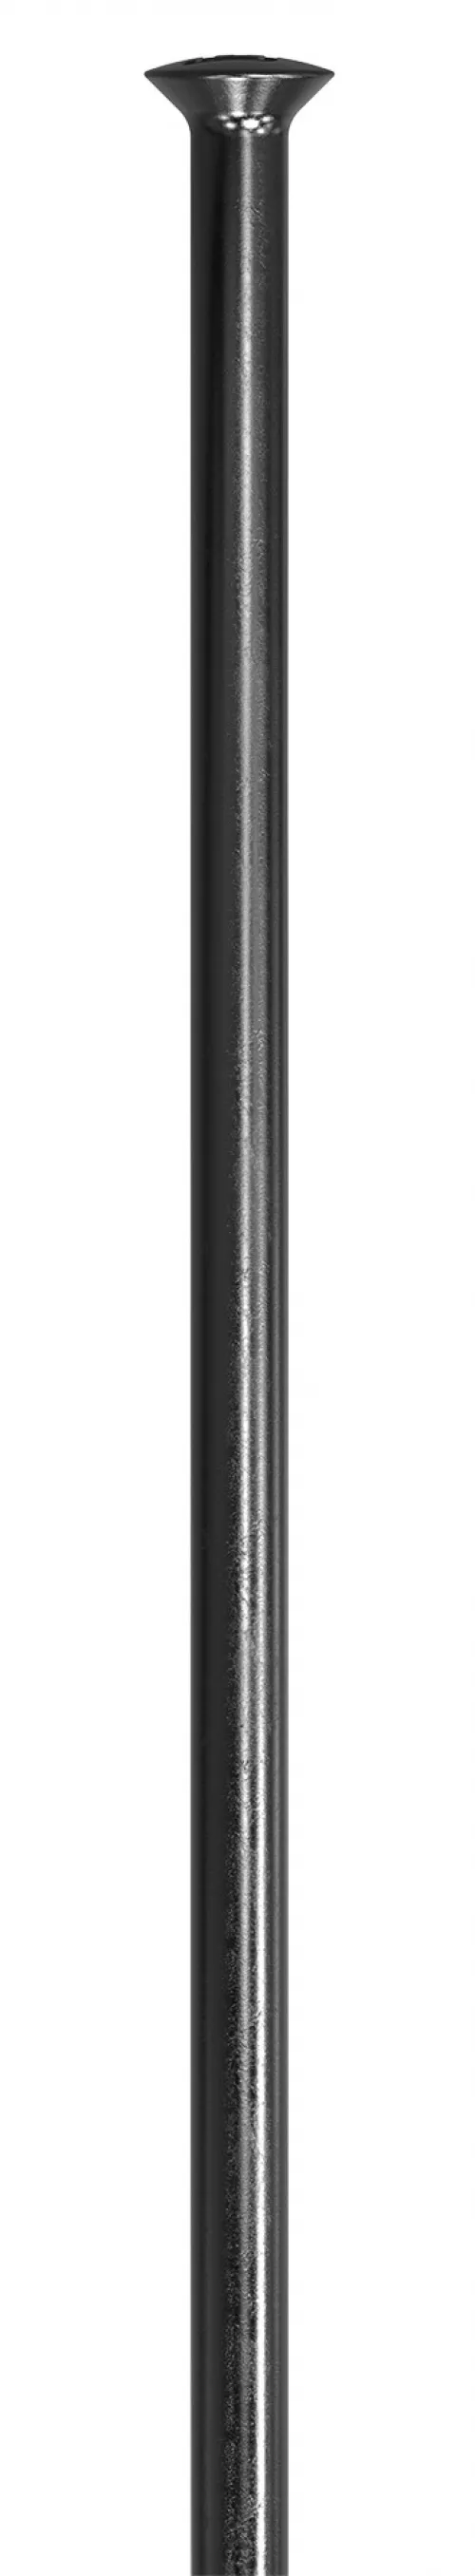 Спицы DT Swiss Сhampion (Straightpull) 2.0mm x 308mm black 100шт